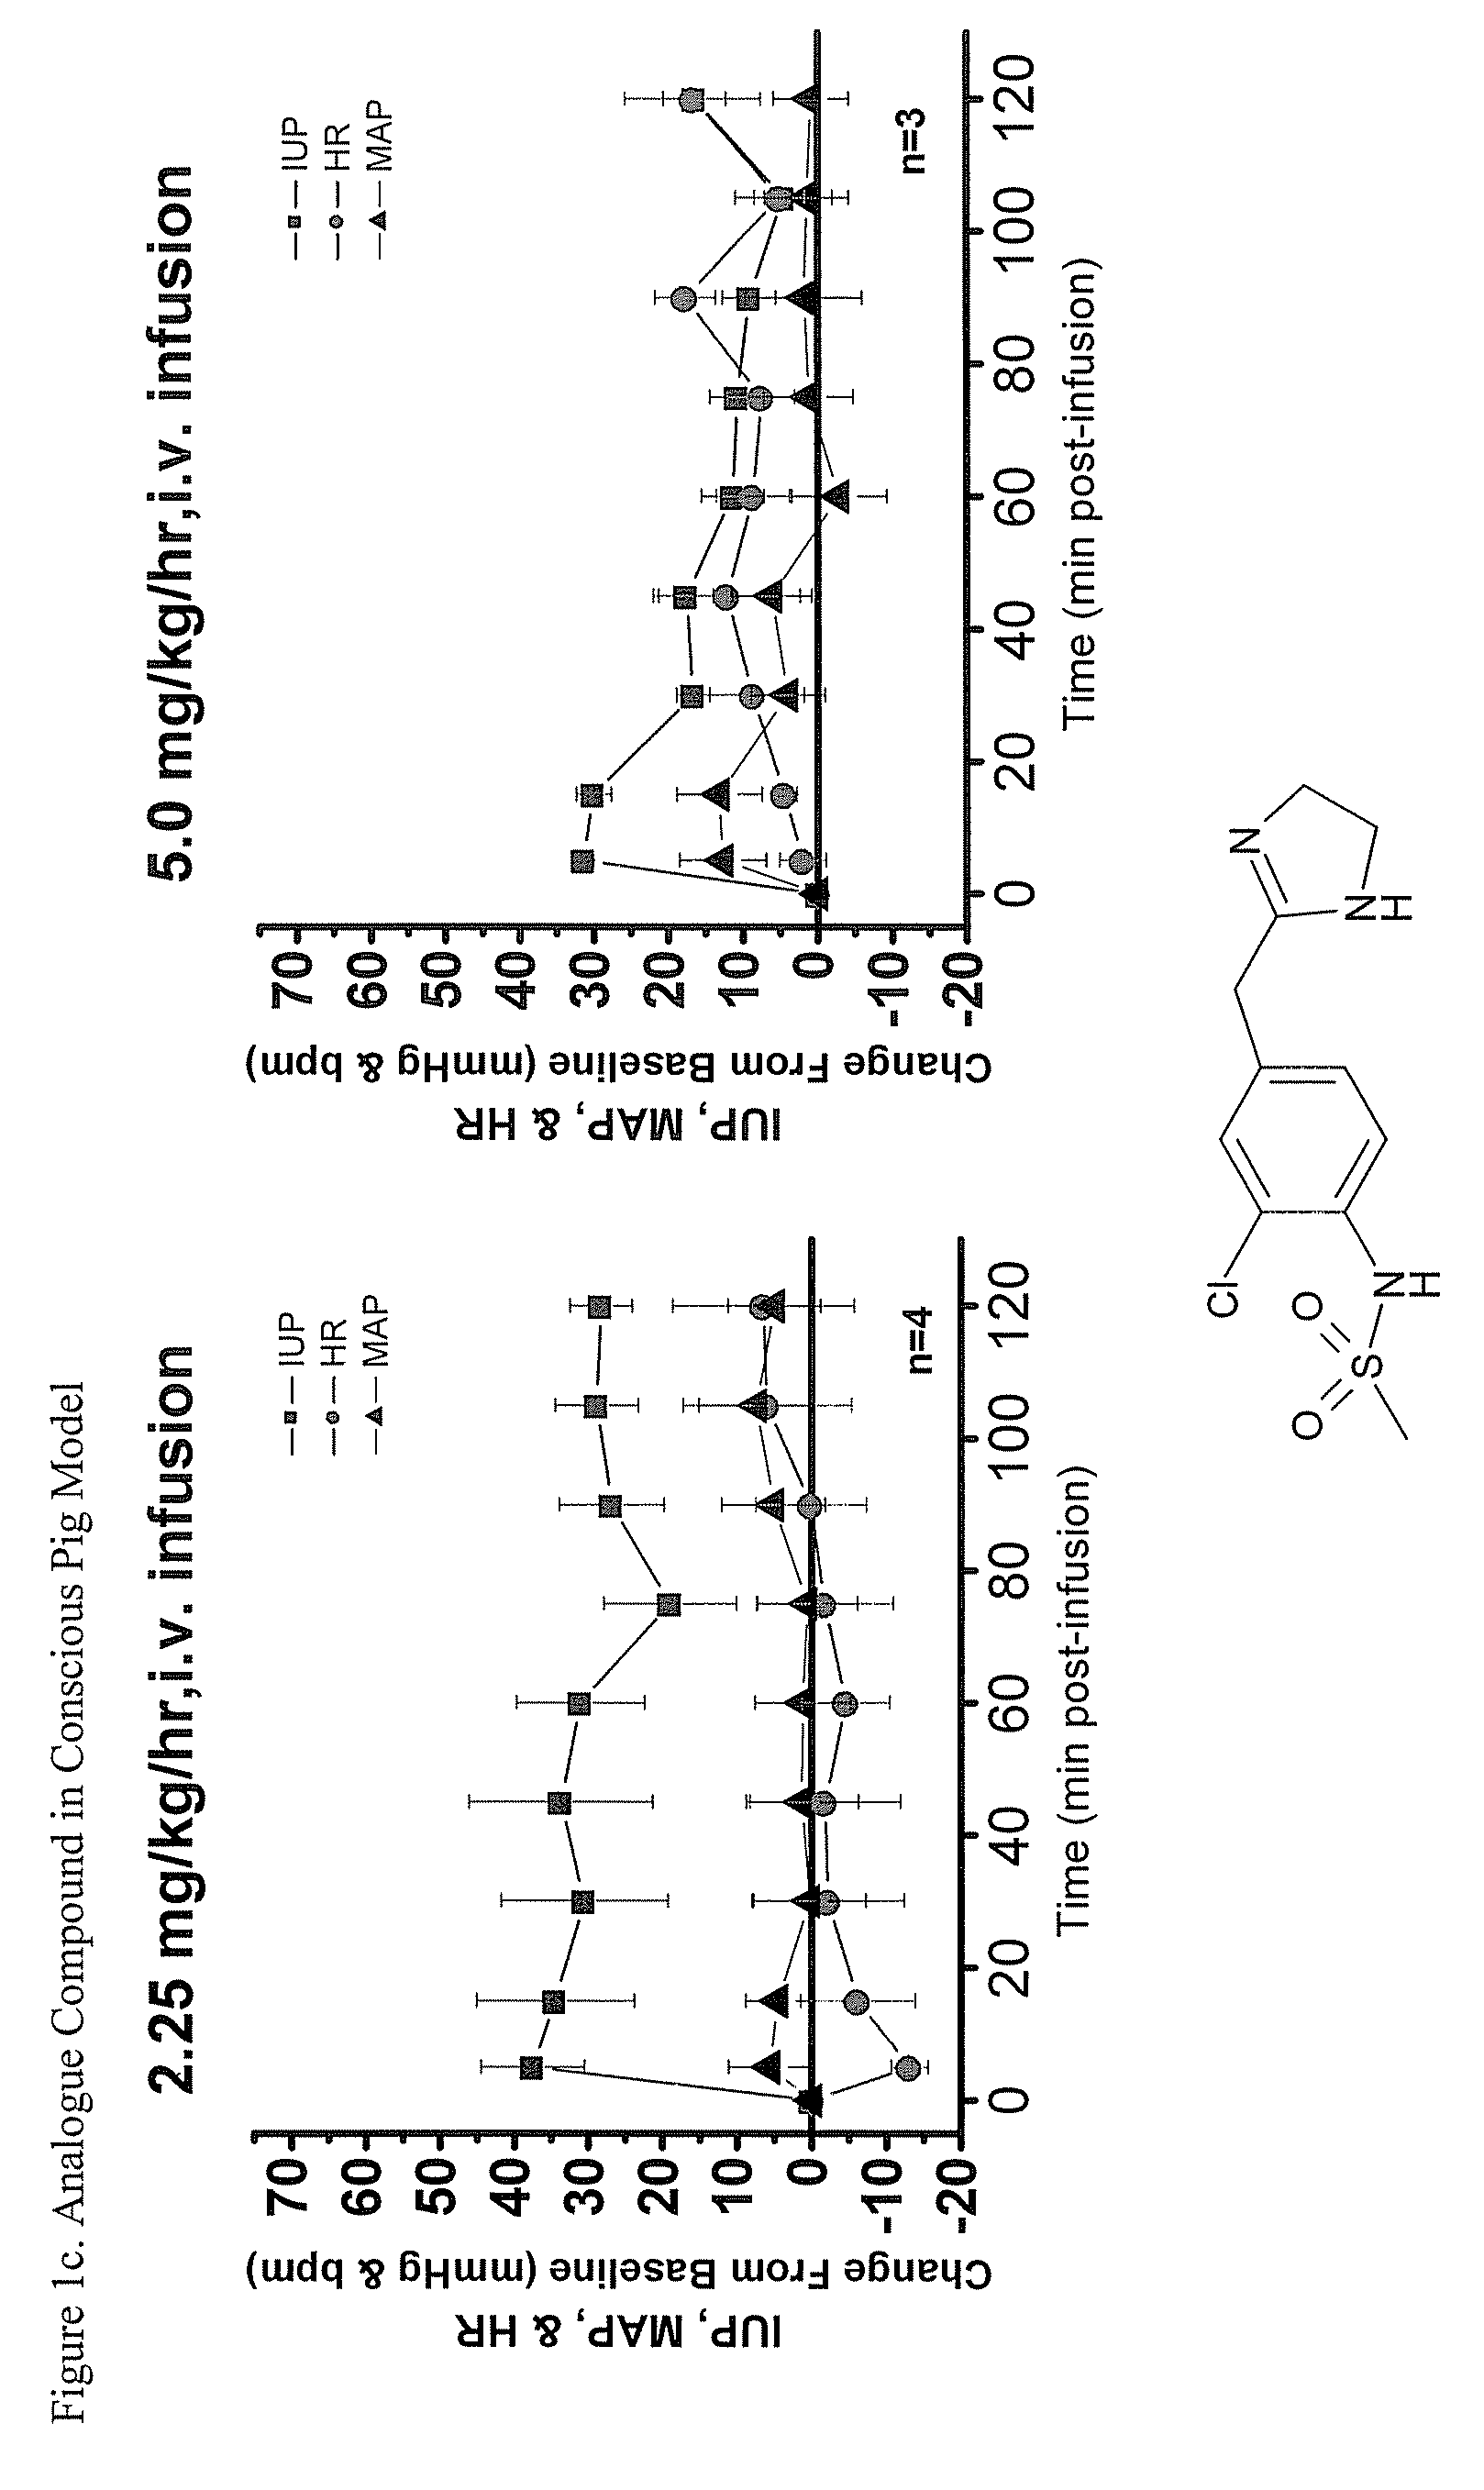 Imidazolinylmethy aryl sulfonamide